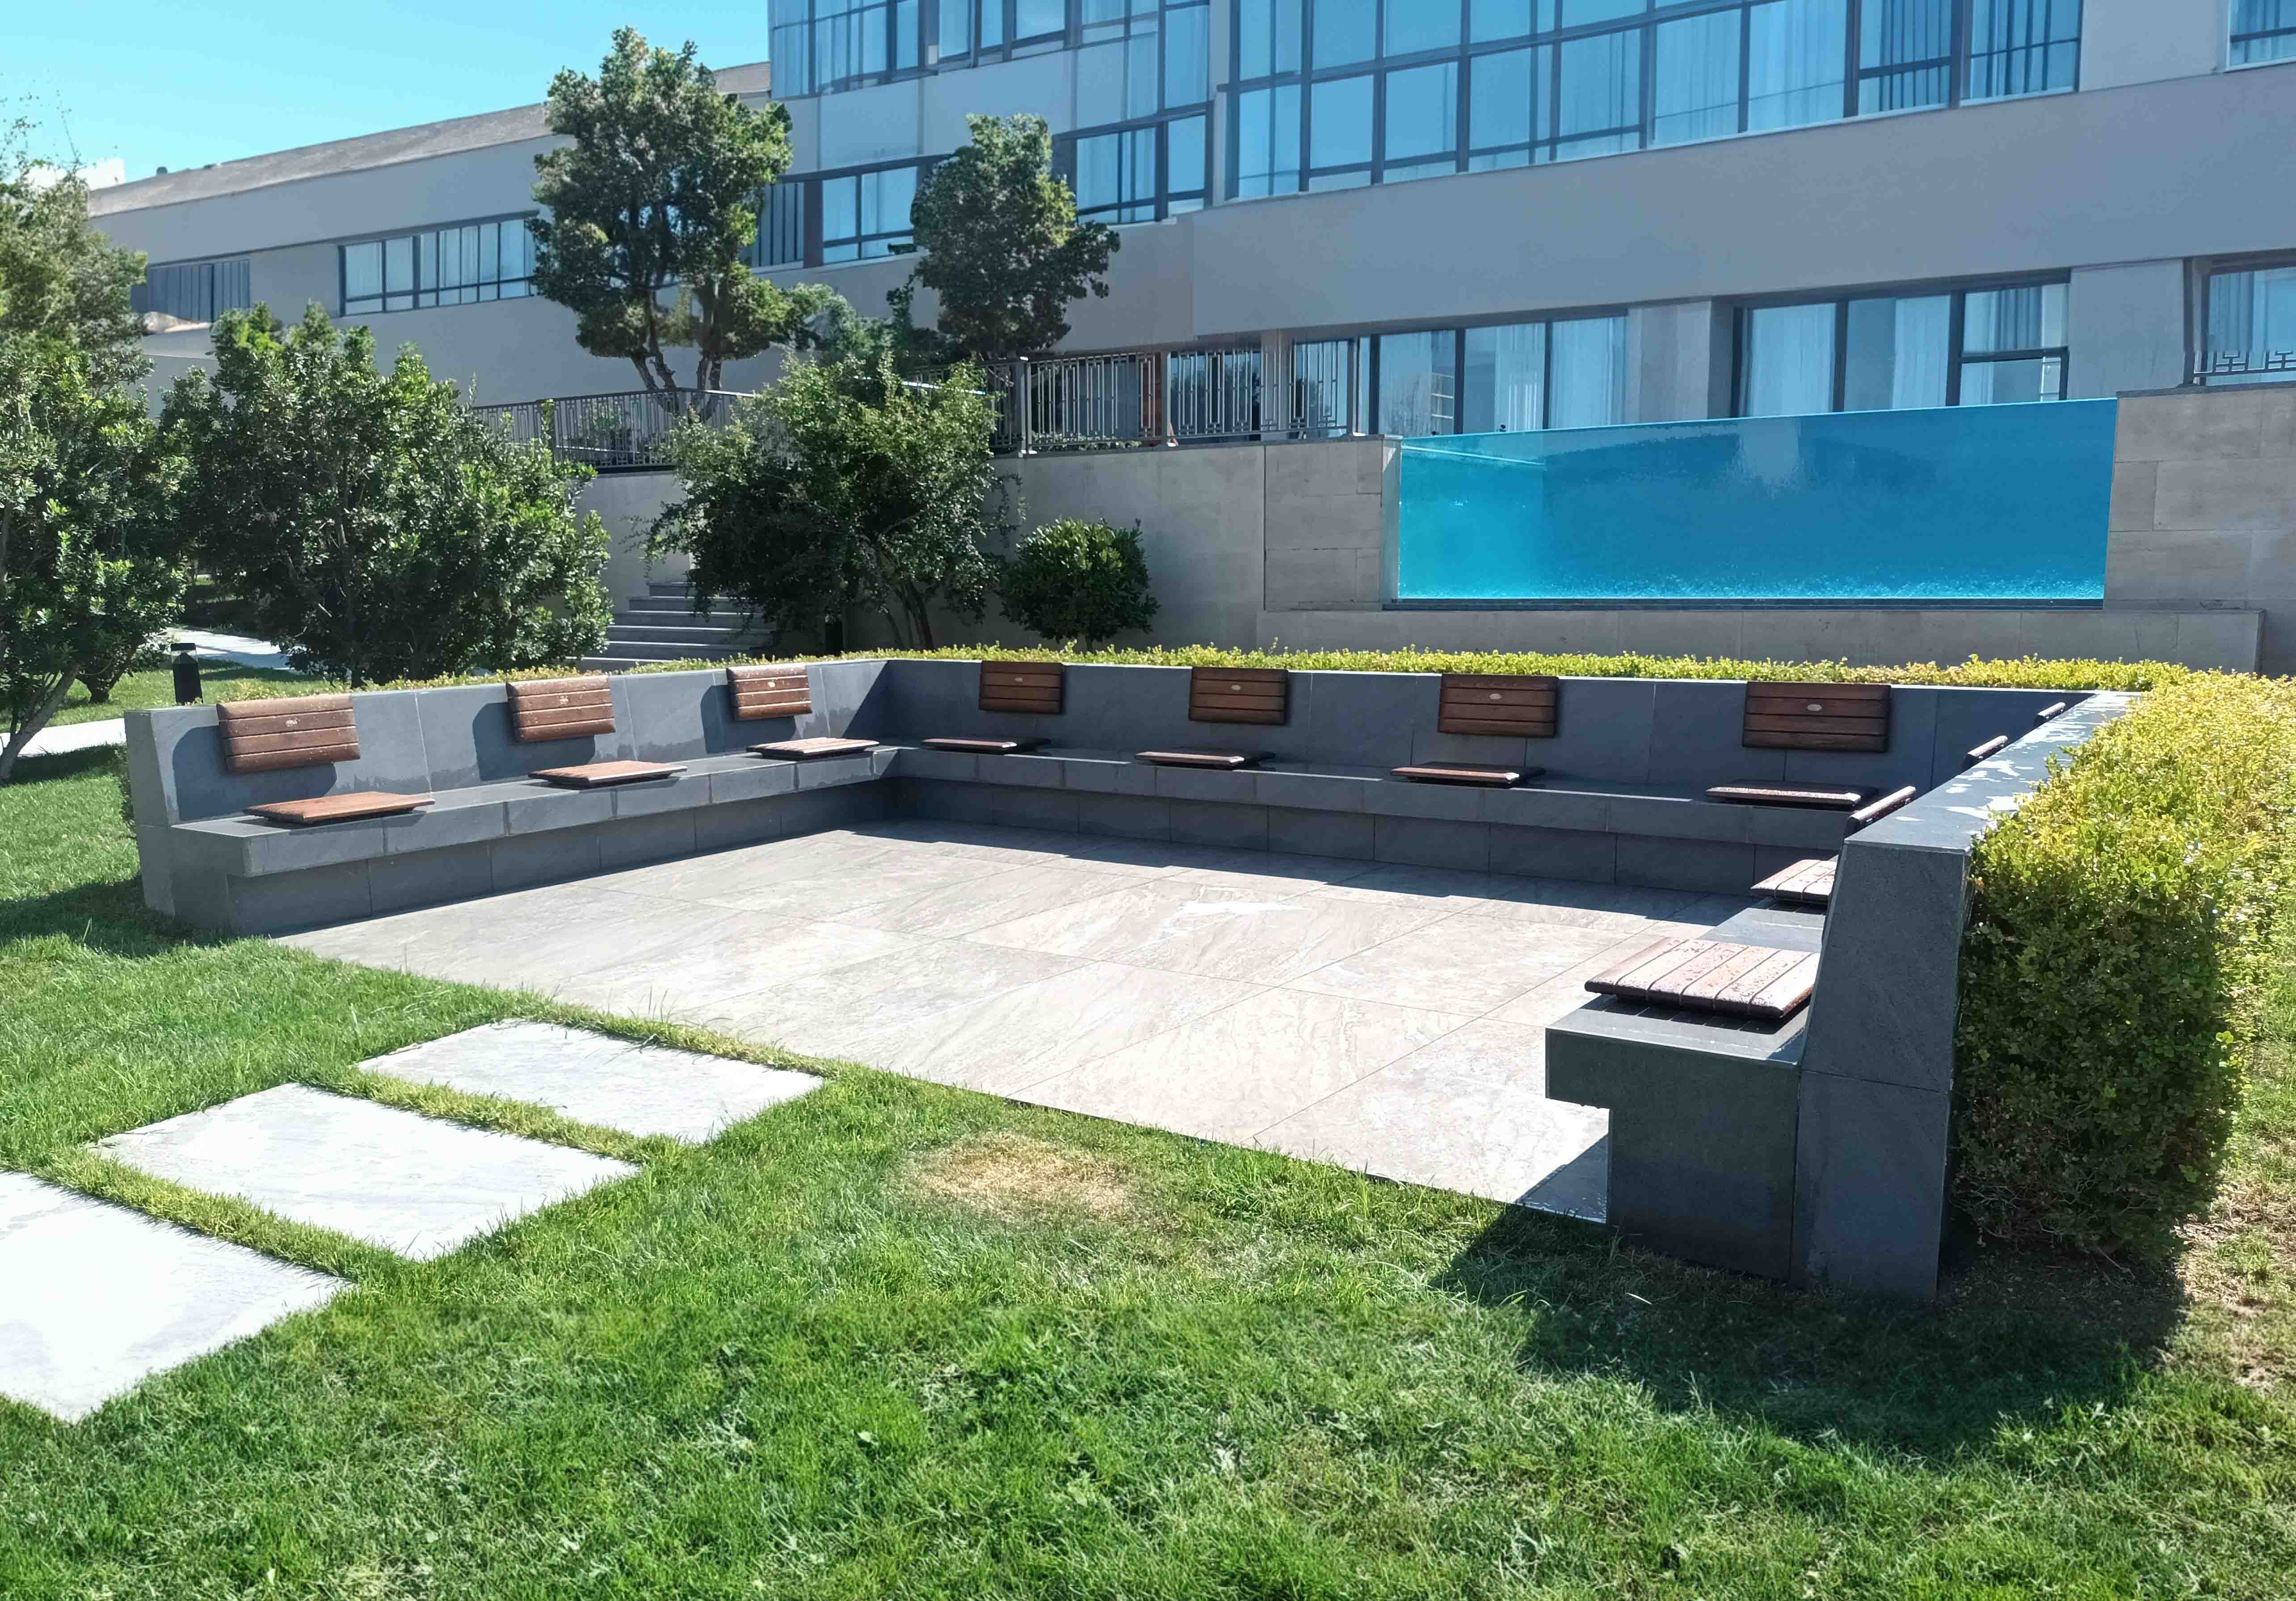 Seating on concrete · Bancos personalizados - IDEA.AZ